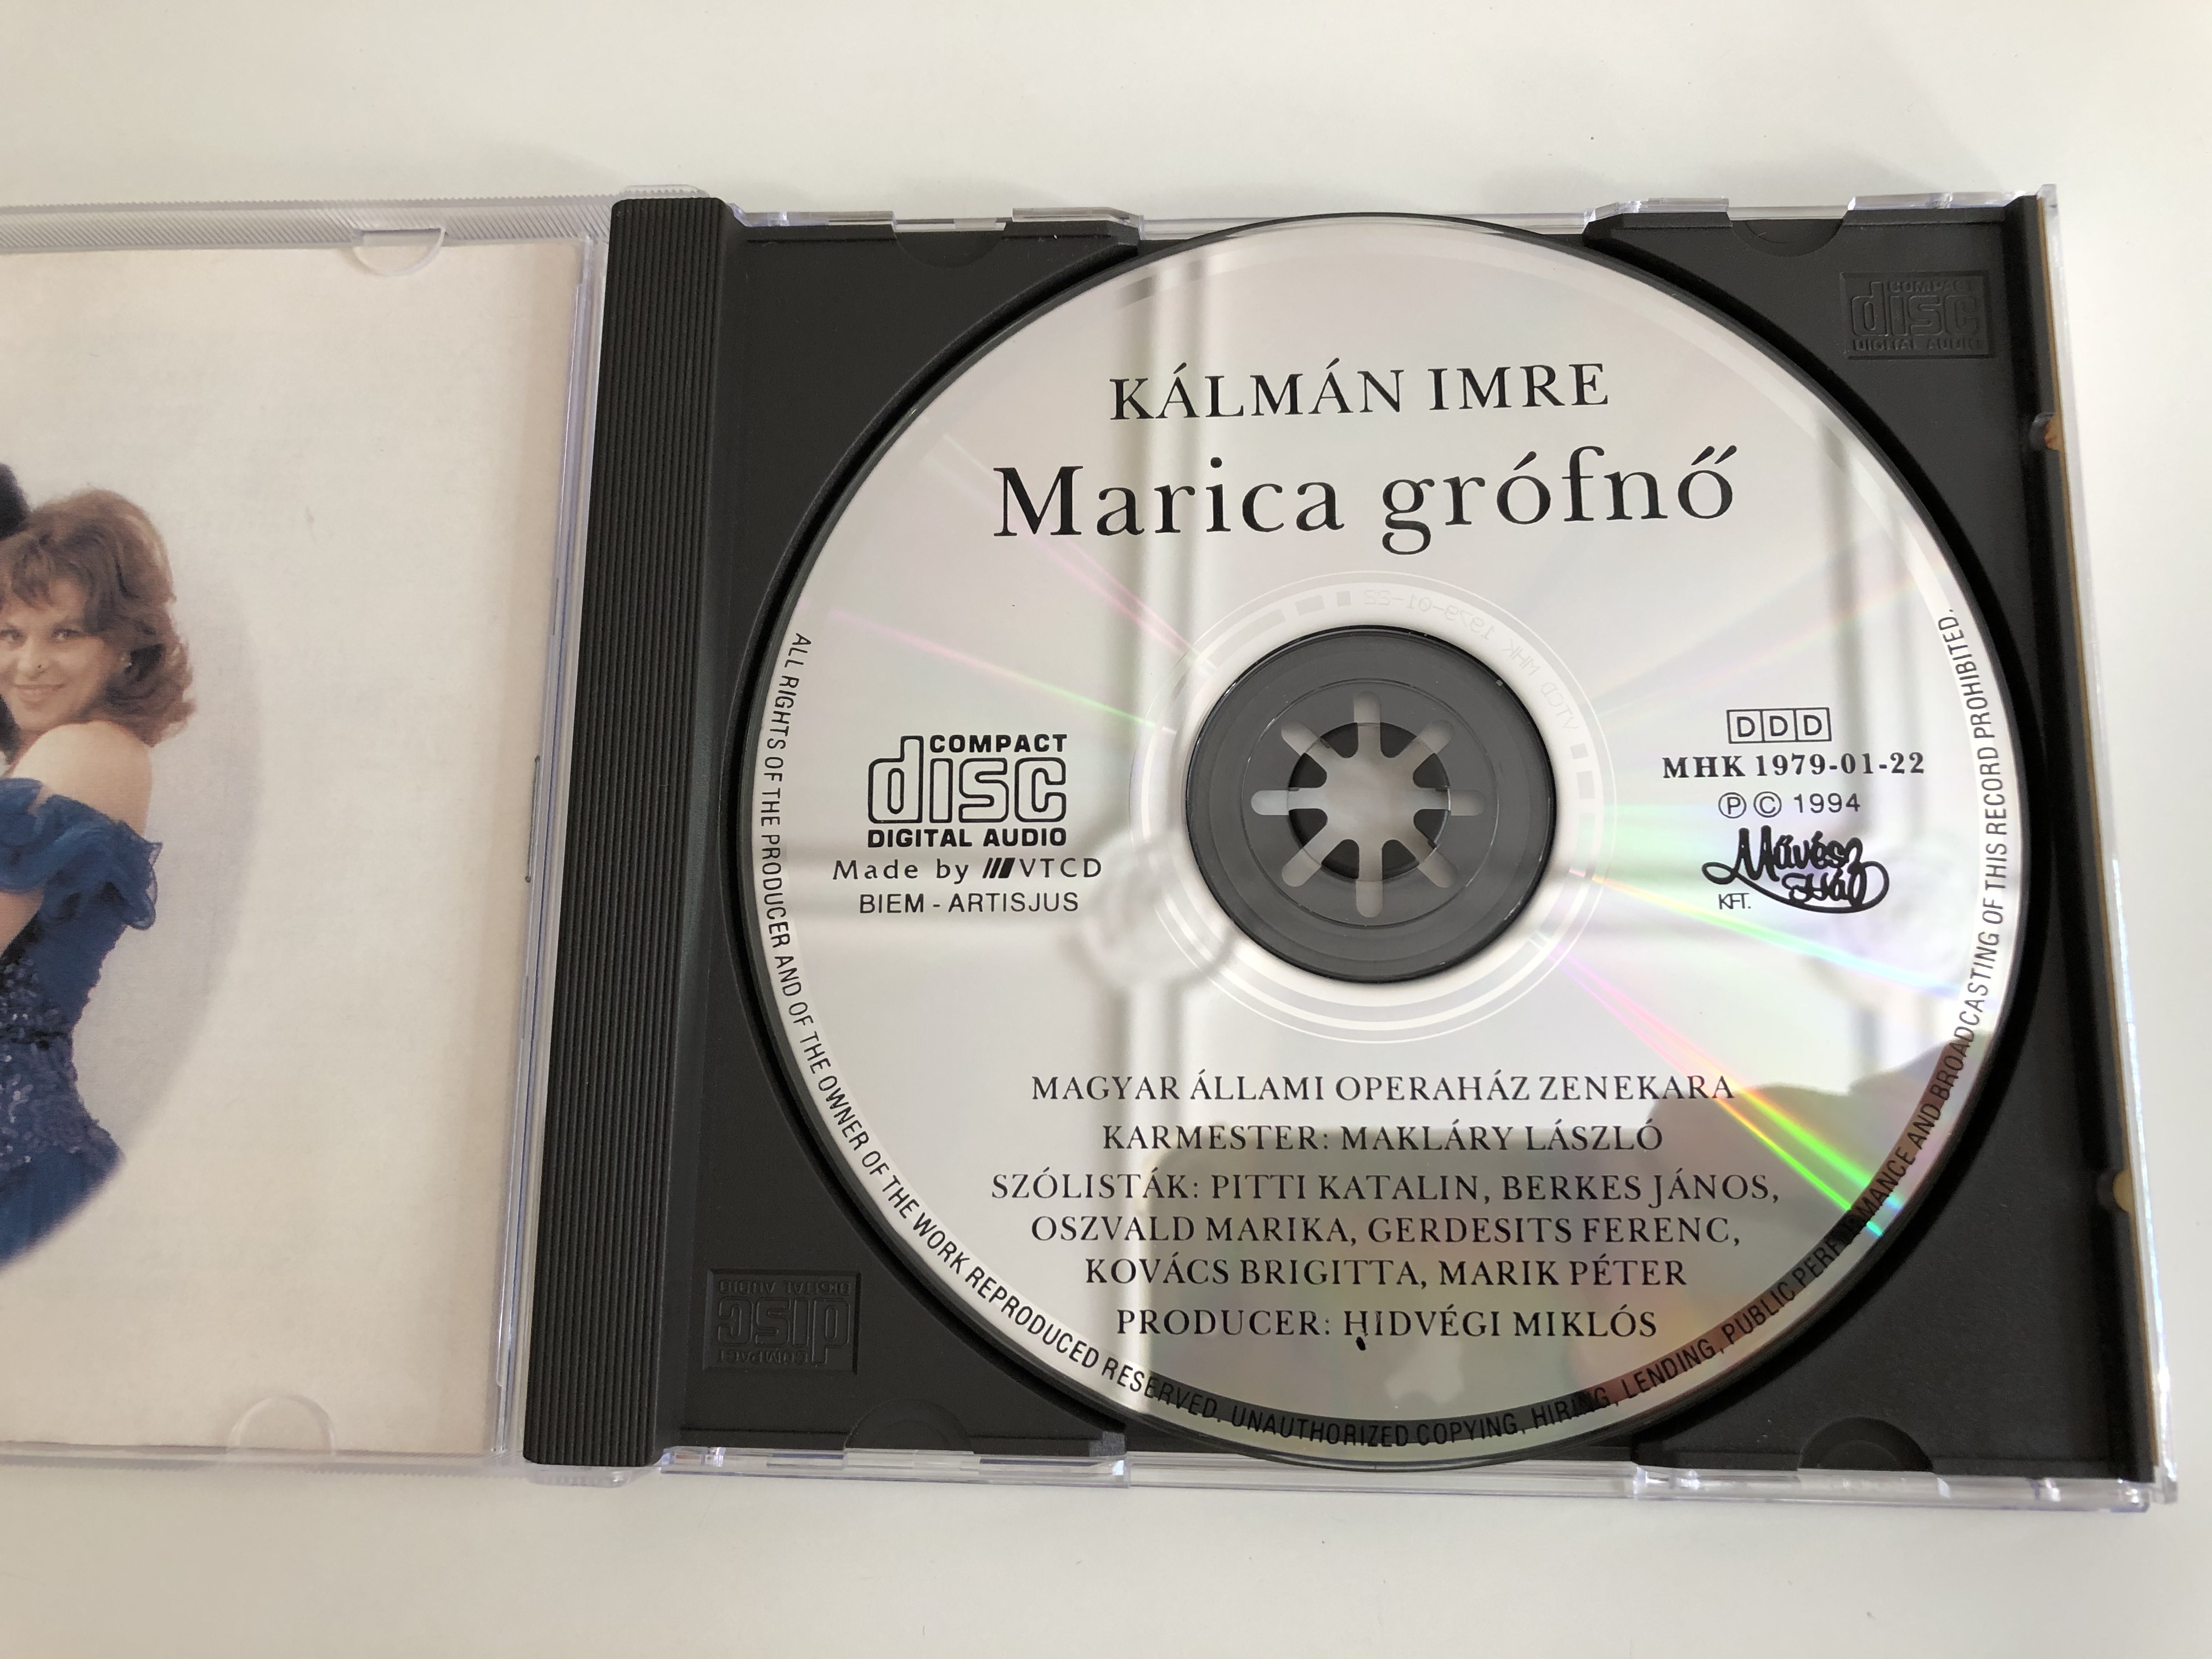 kalman-imre-marica-grofno-operett-ket-reszben-szoveget-irta-julius-brammer-es-alfred-grunwald-muvesz-haz-kft.-audio-cd-1994-mhk-1979-01-22-10-.jpg